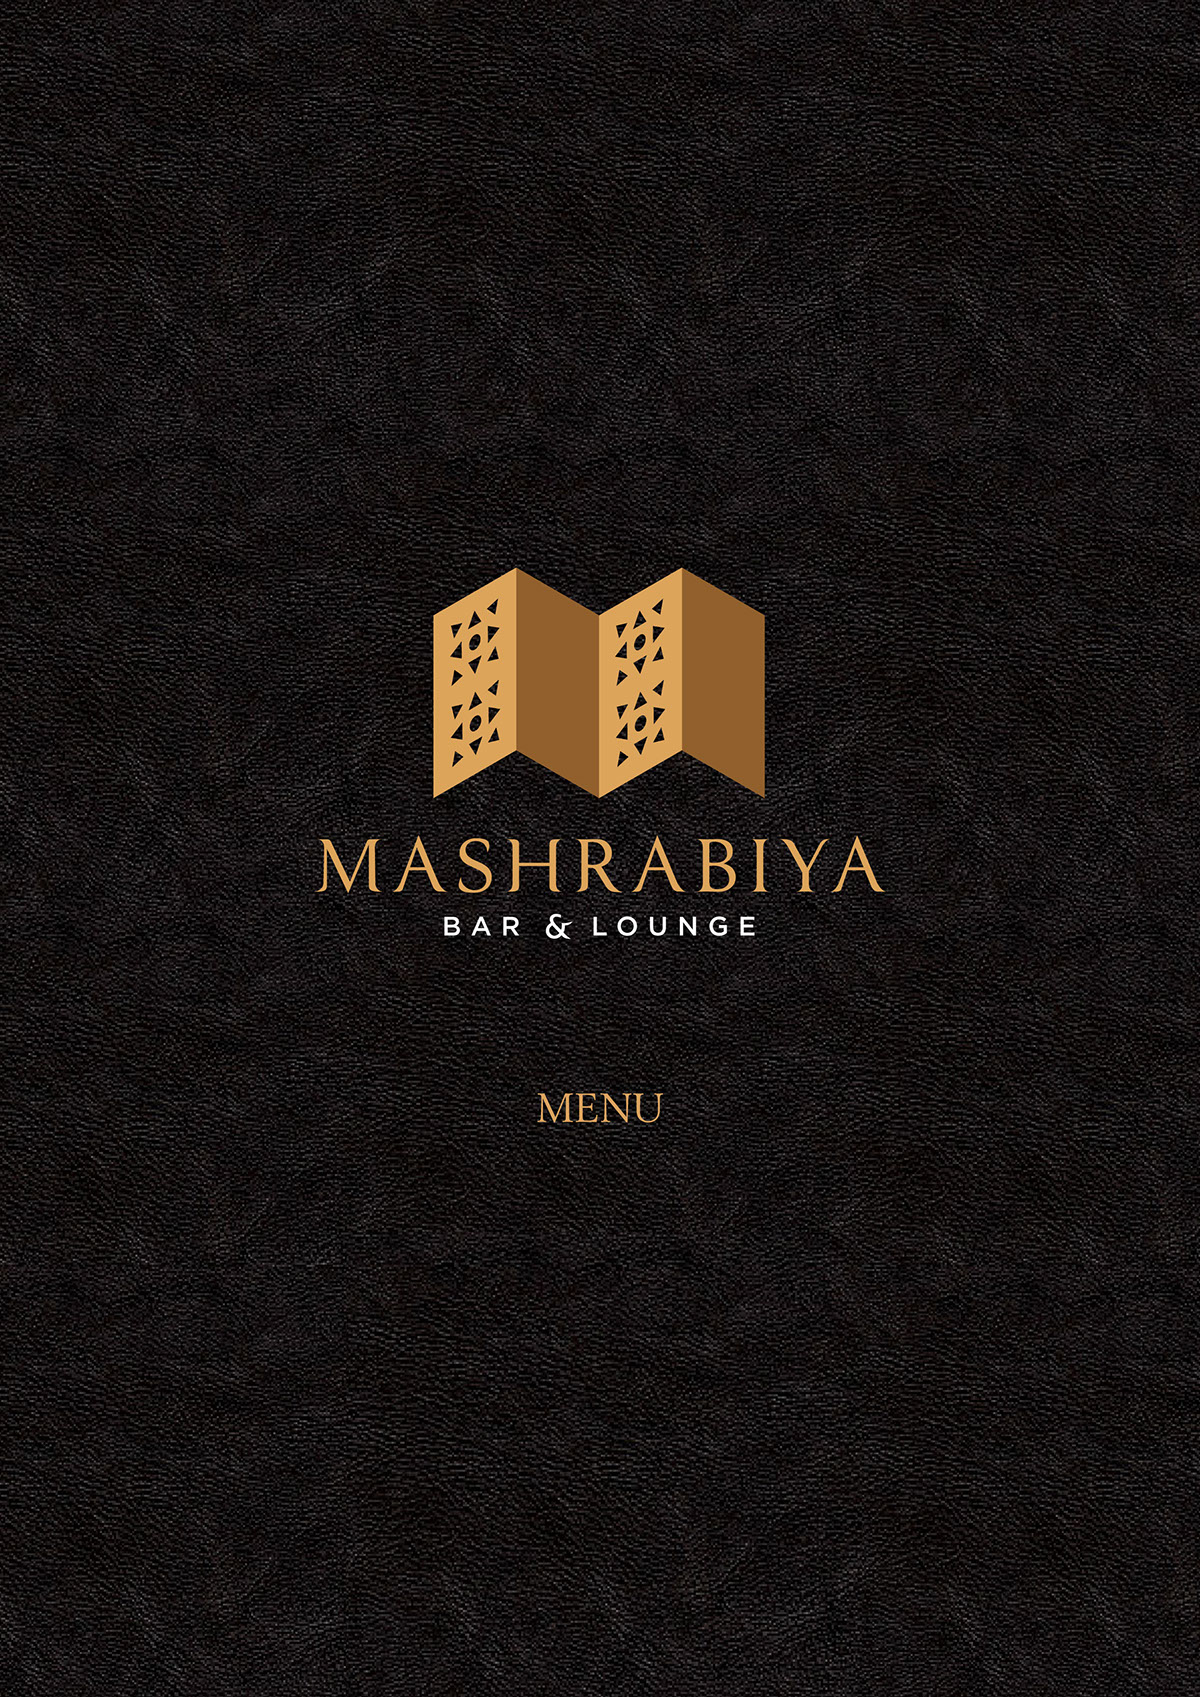 arabian middle eastern bar logo app design wayfinding Ambient marketing   brand identity privacy culture women